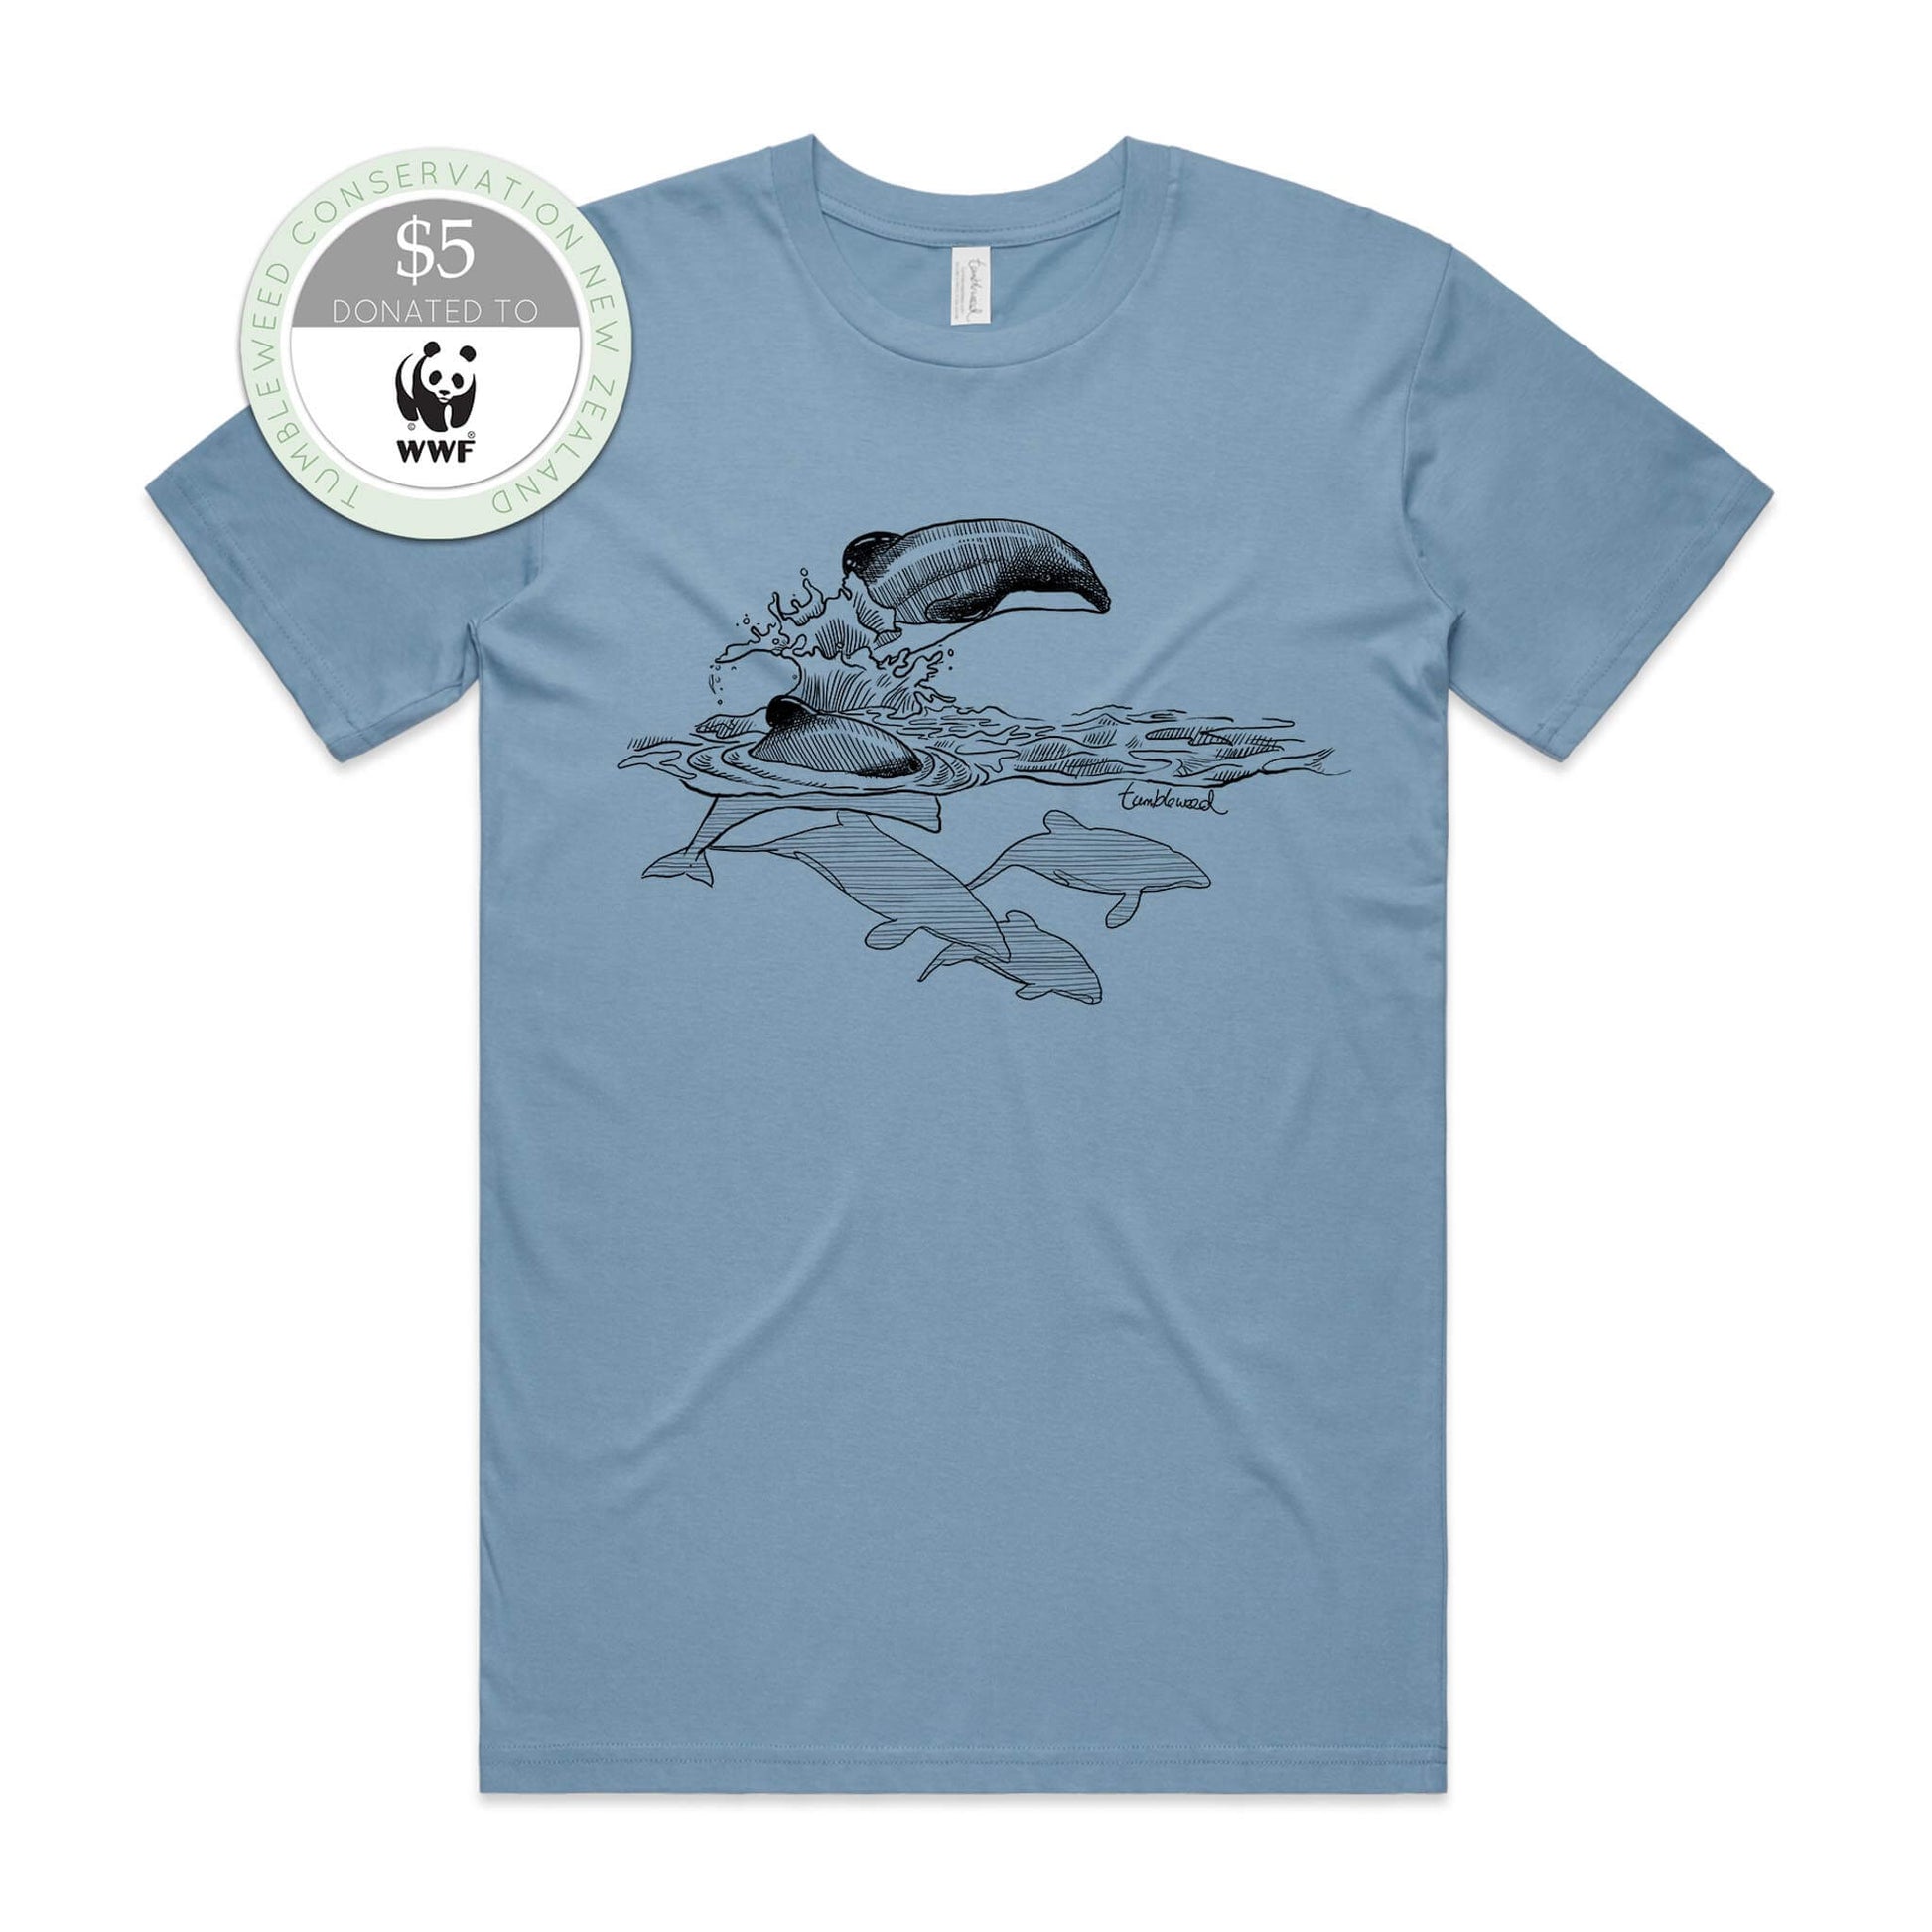 Sage, female t-shirt featuring a screen printed Māui dolphin design.